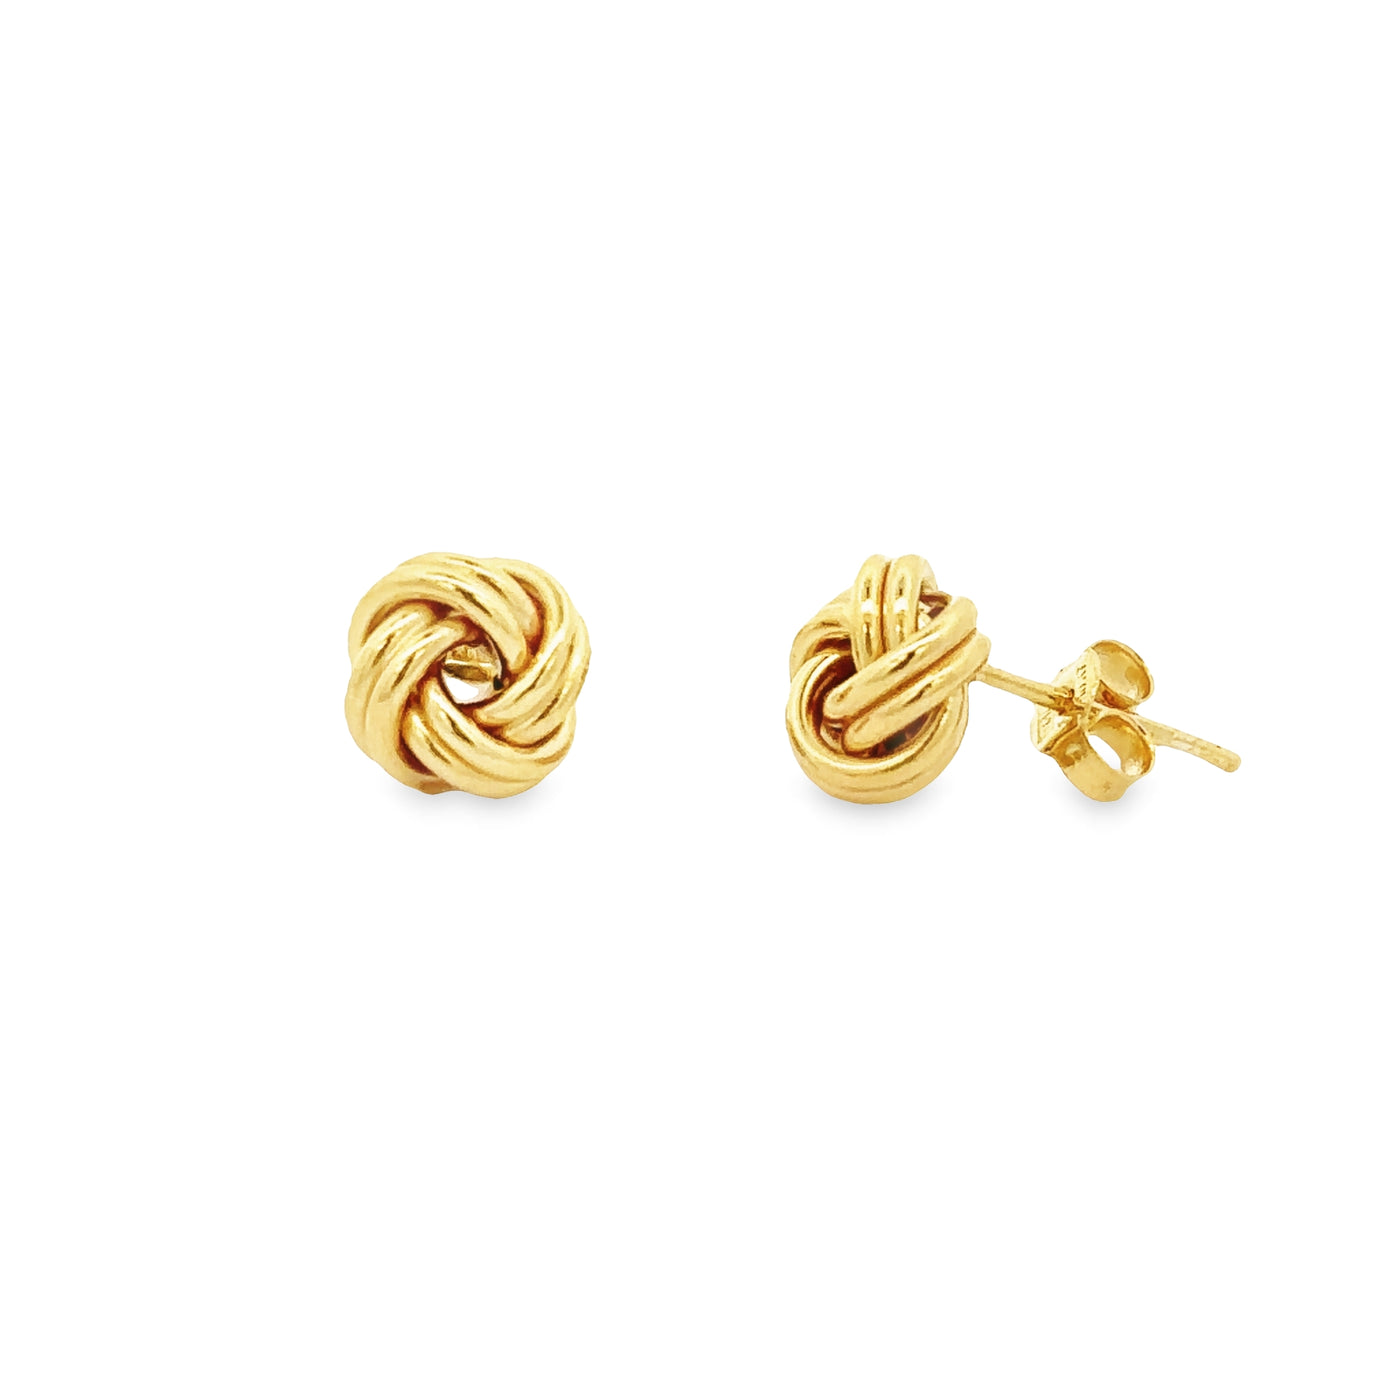 10 Karat Yellow Gold Knot Stud Earrings